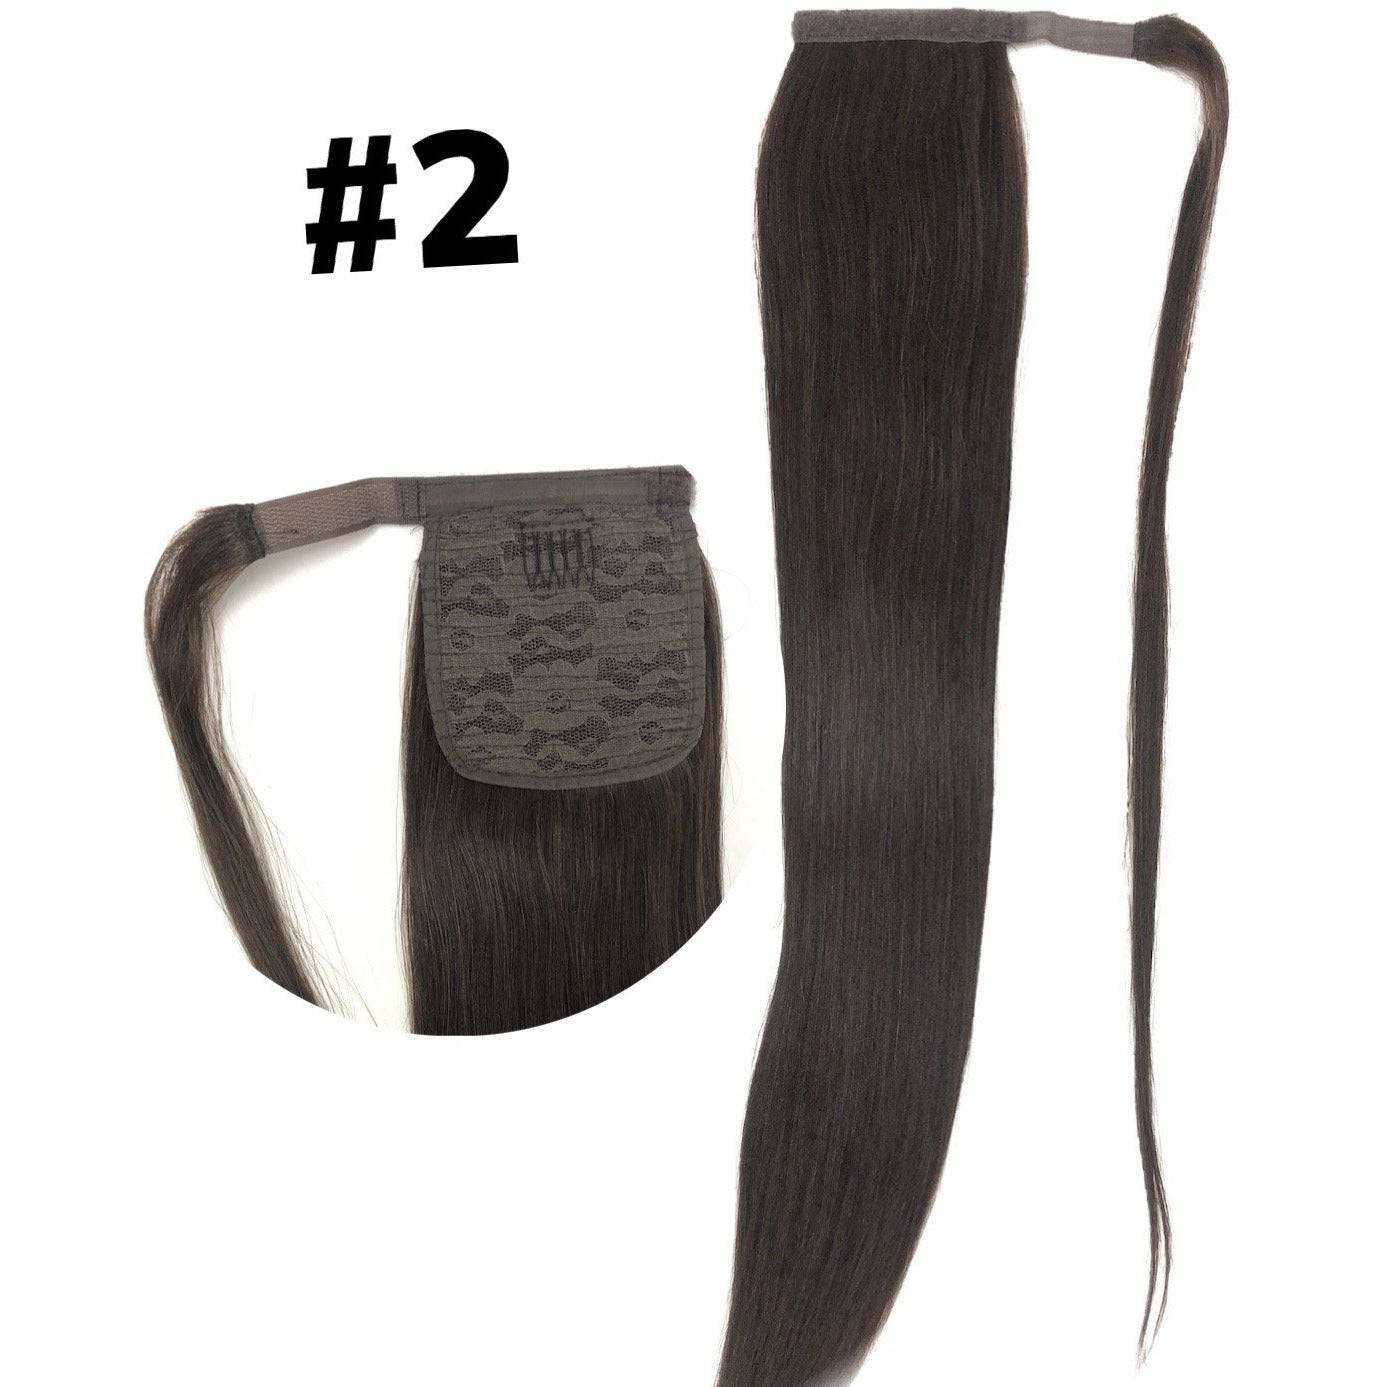 VIP PONYTAIL / Silky 24" (100 grams) 100% Human Hair - VIP Extensions